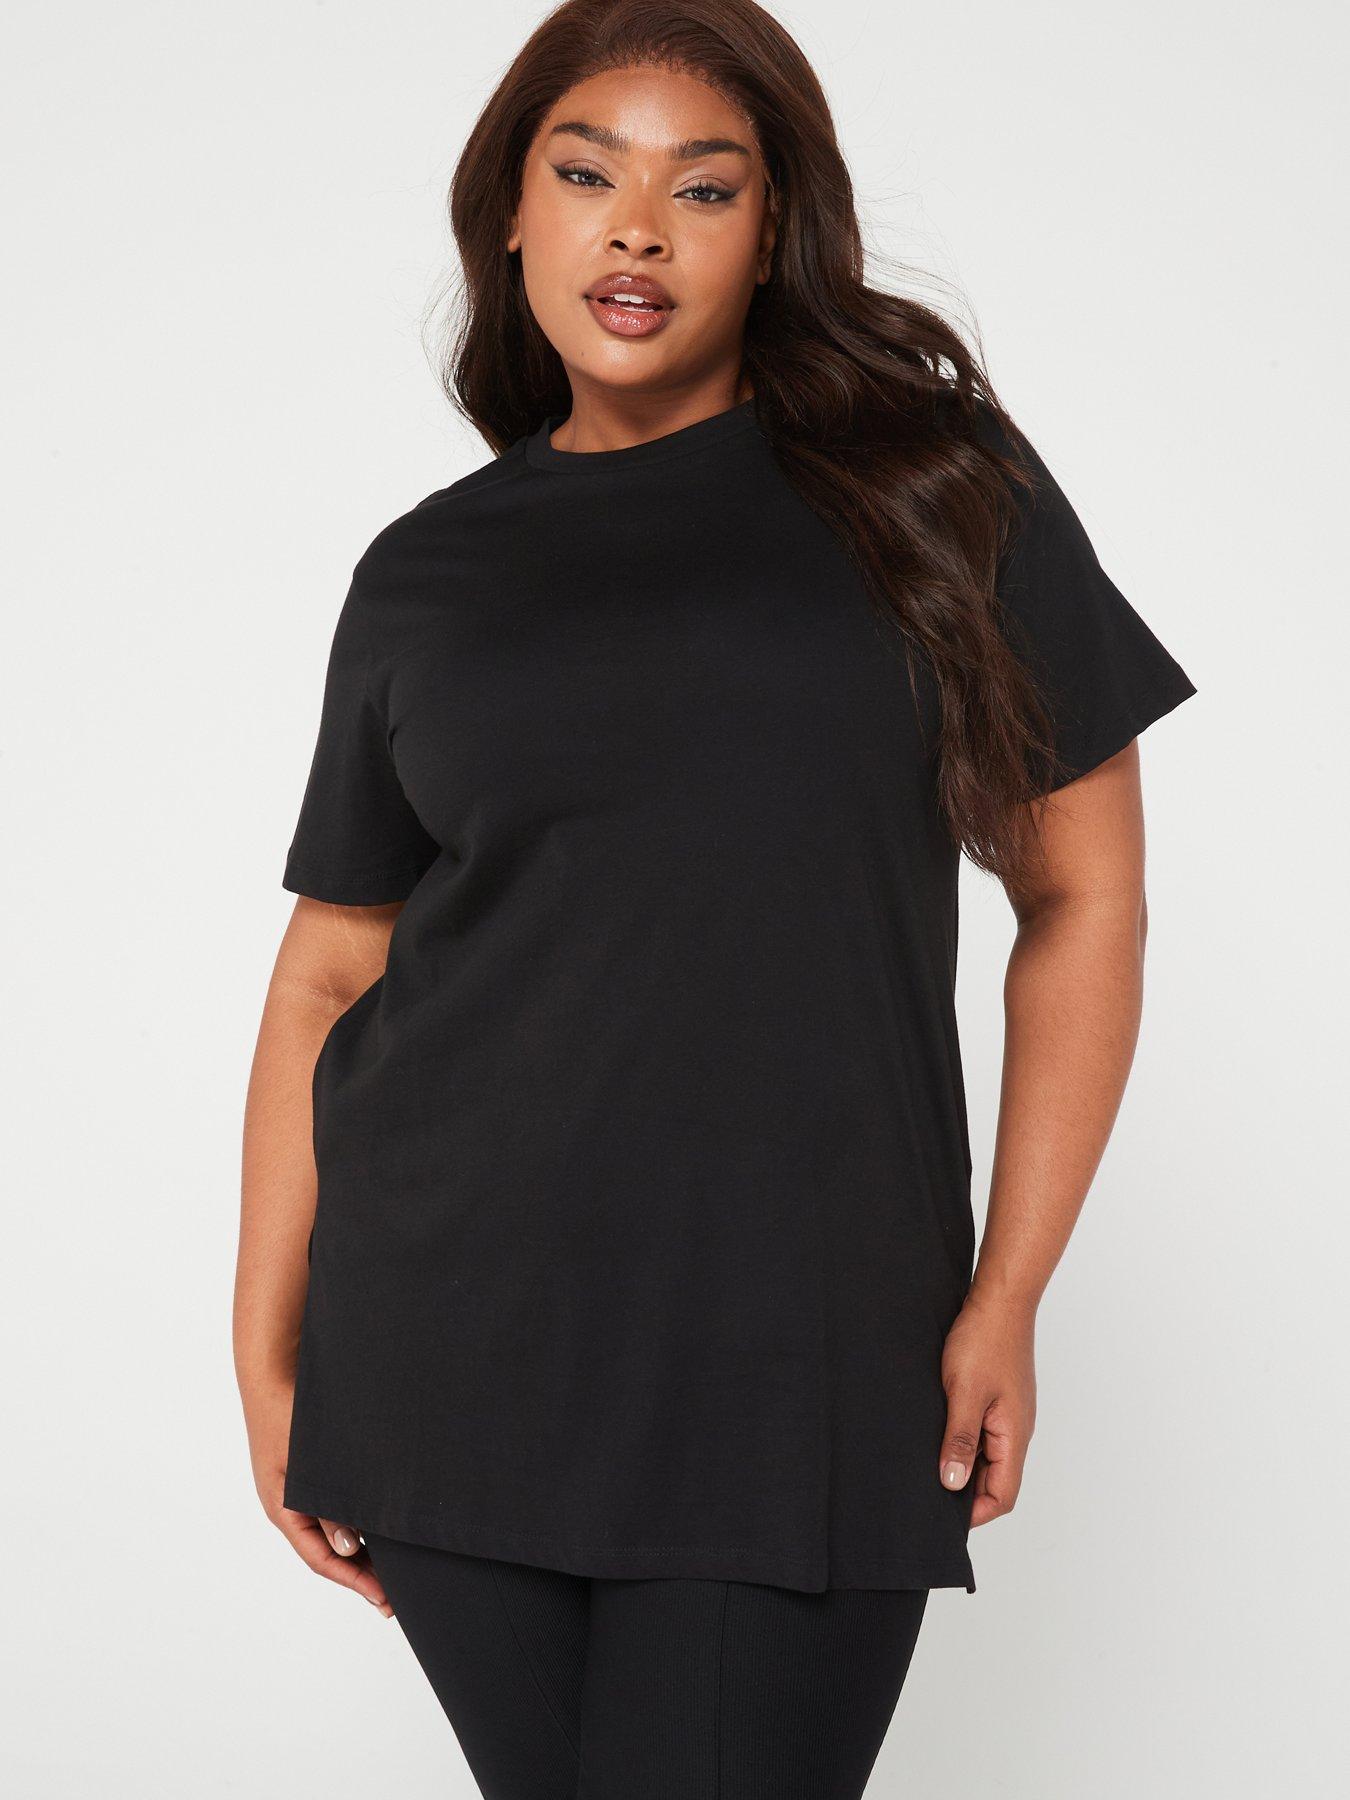 Black | Plus Size | Tops ☀ t-shirts ...